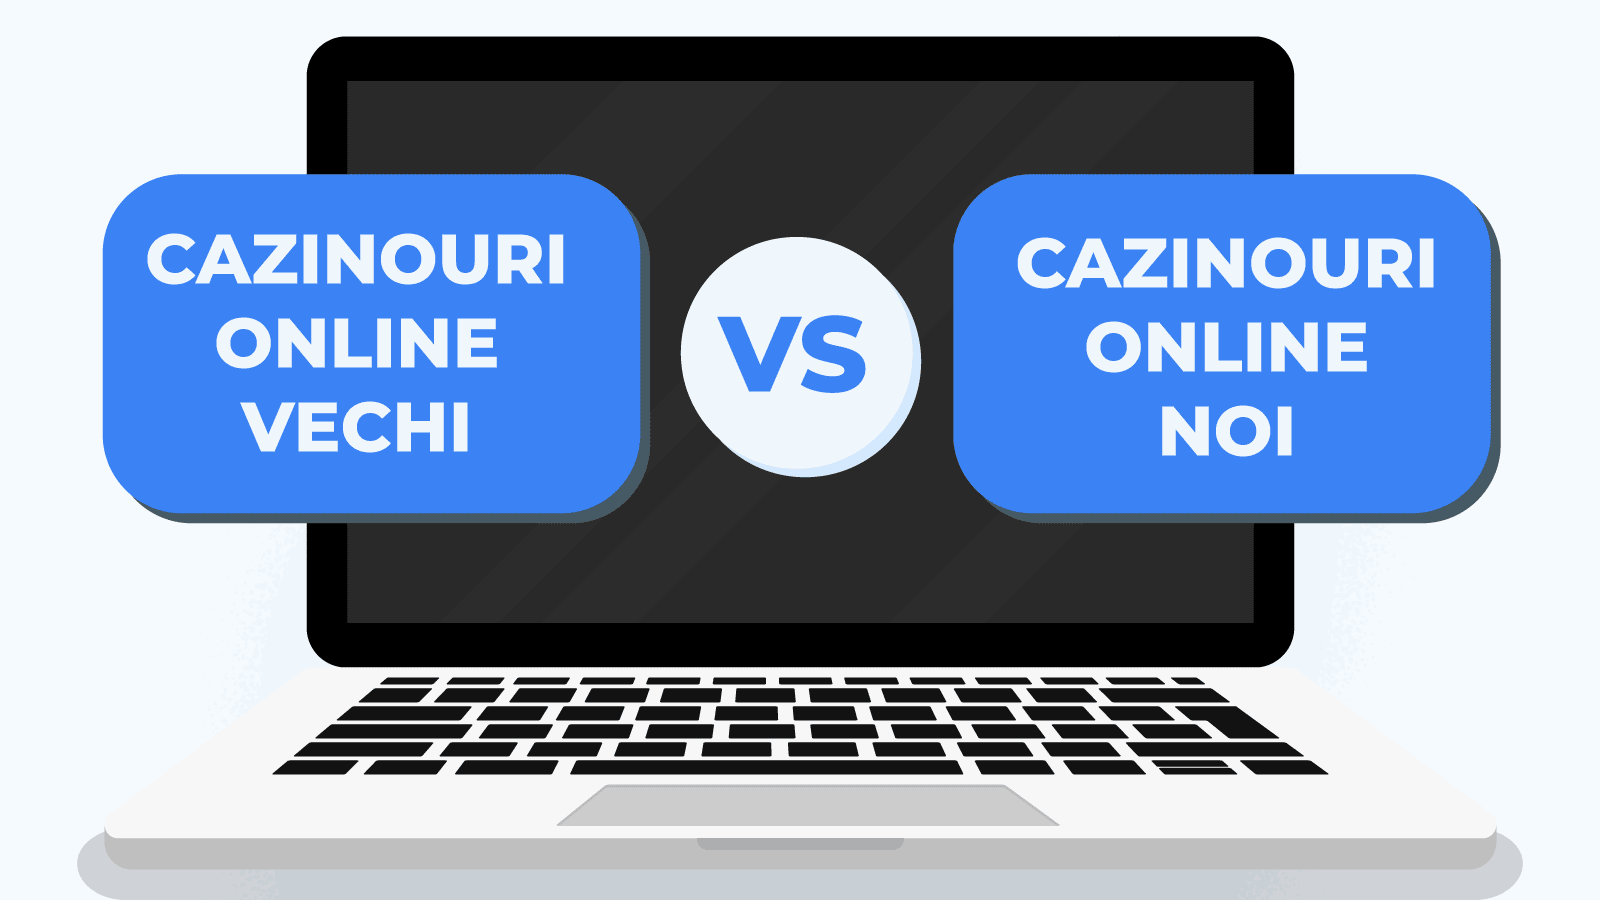 Cazinouri online vechi vs cazinouri online noi - Ce alegi